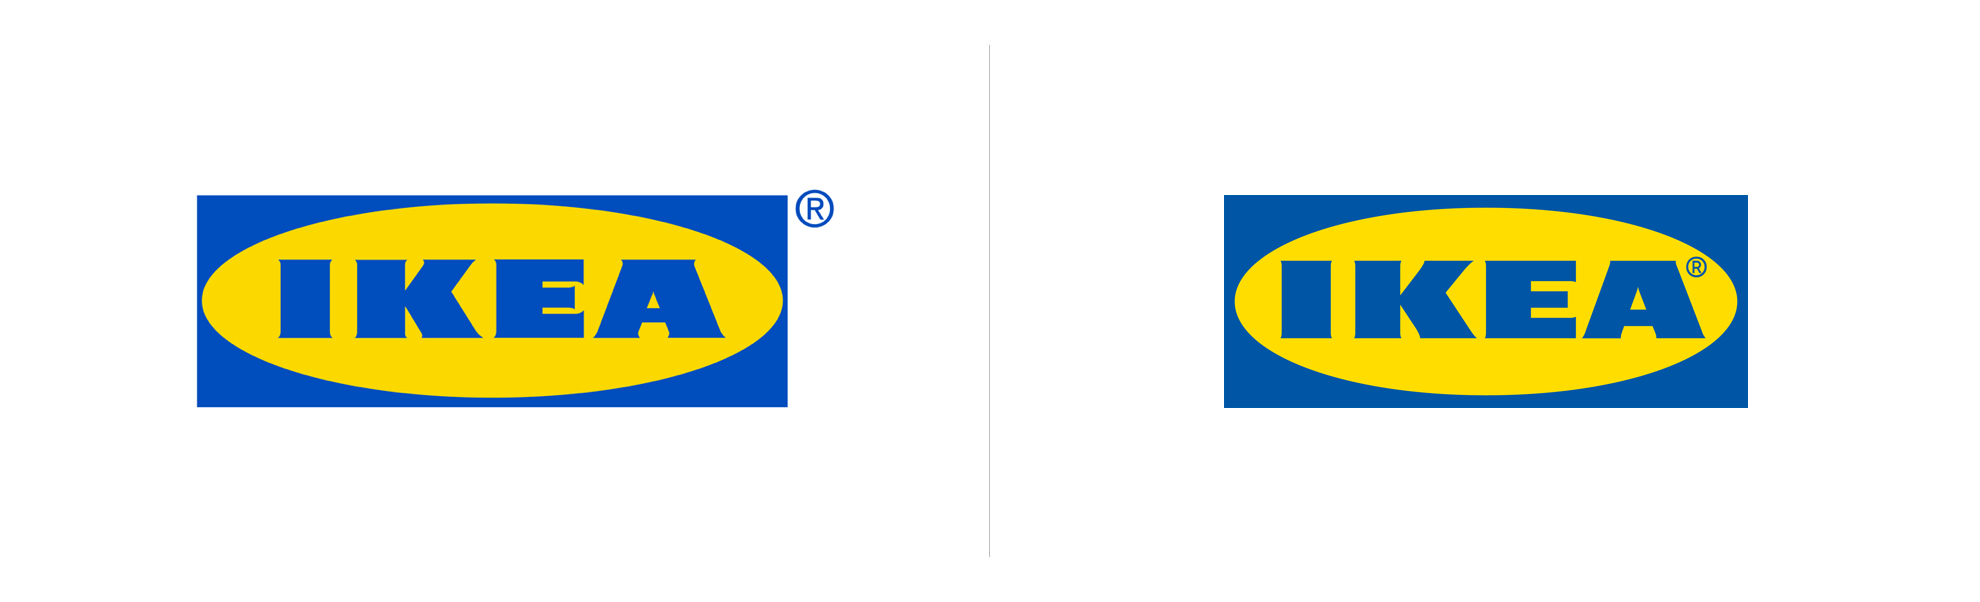 nowe i stare logo ikea